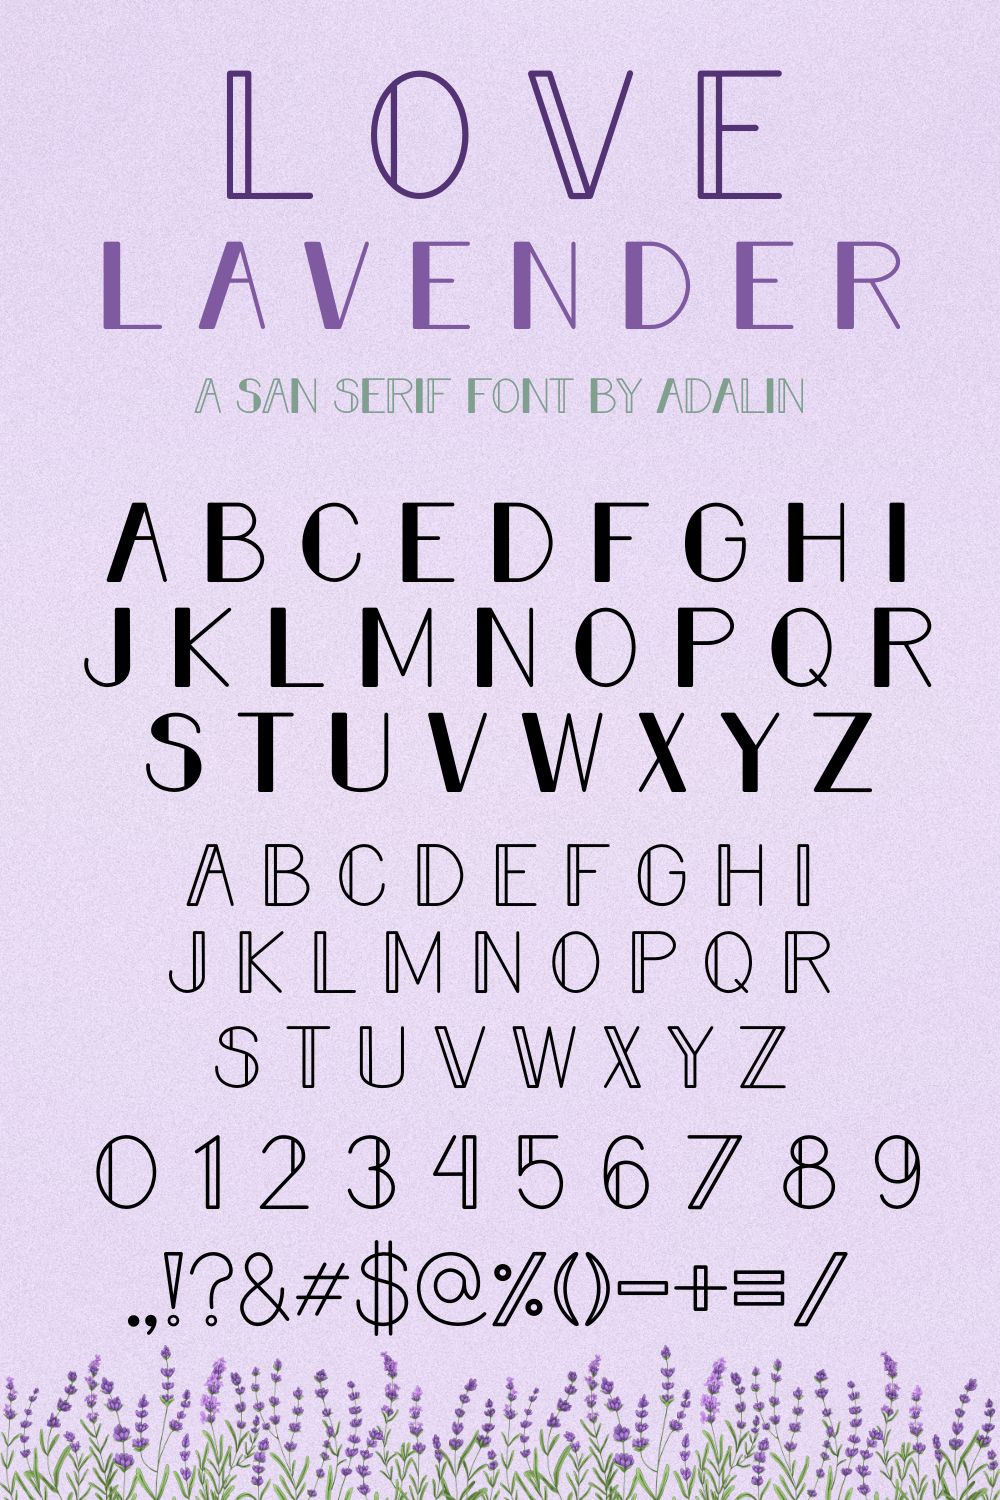 Love Lavender - San Serif Font pinterest preview image.